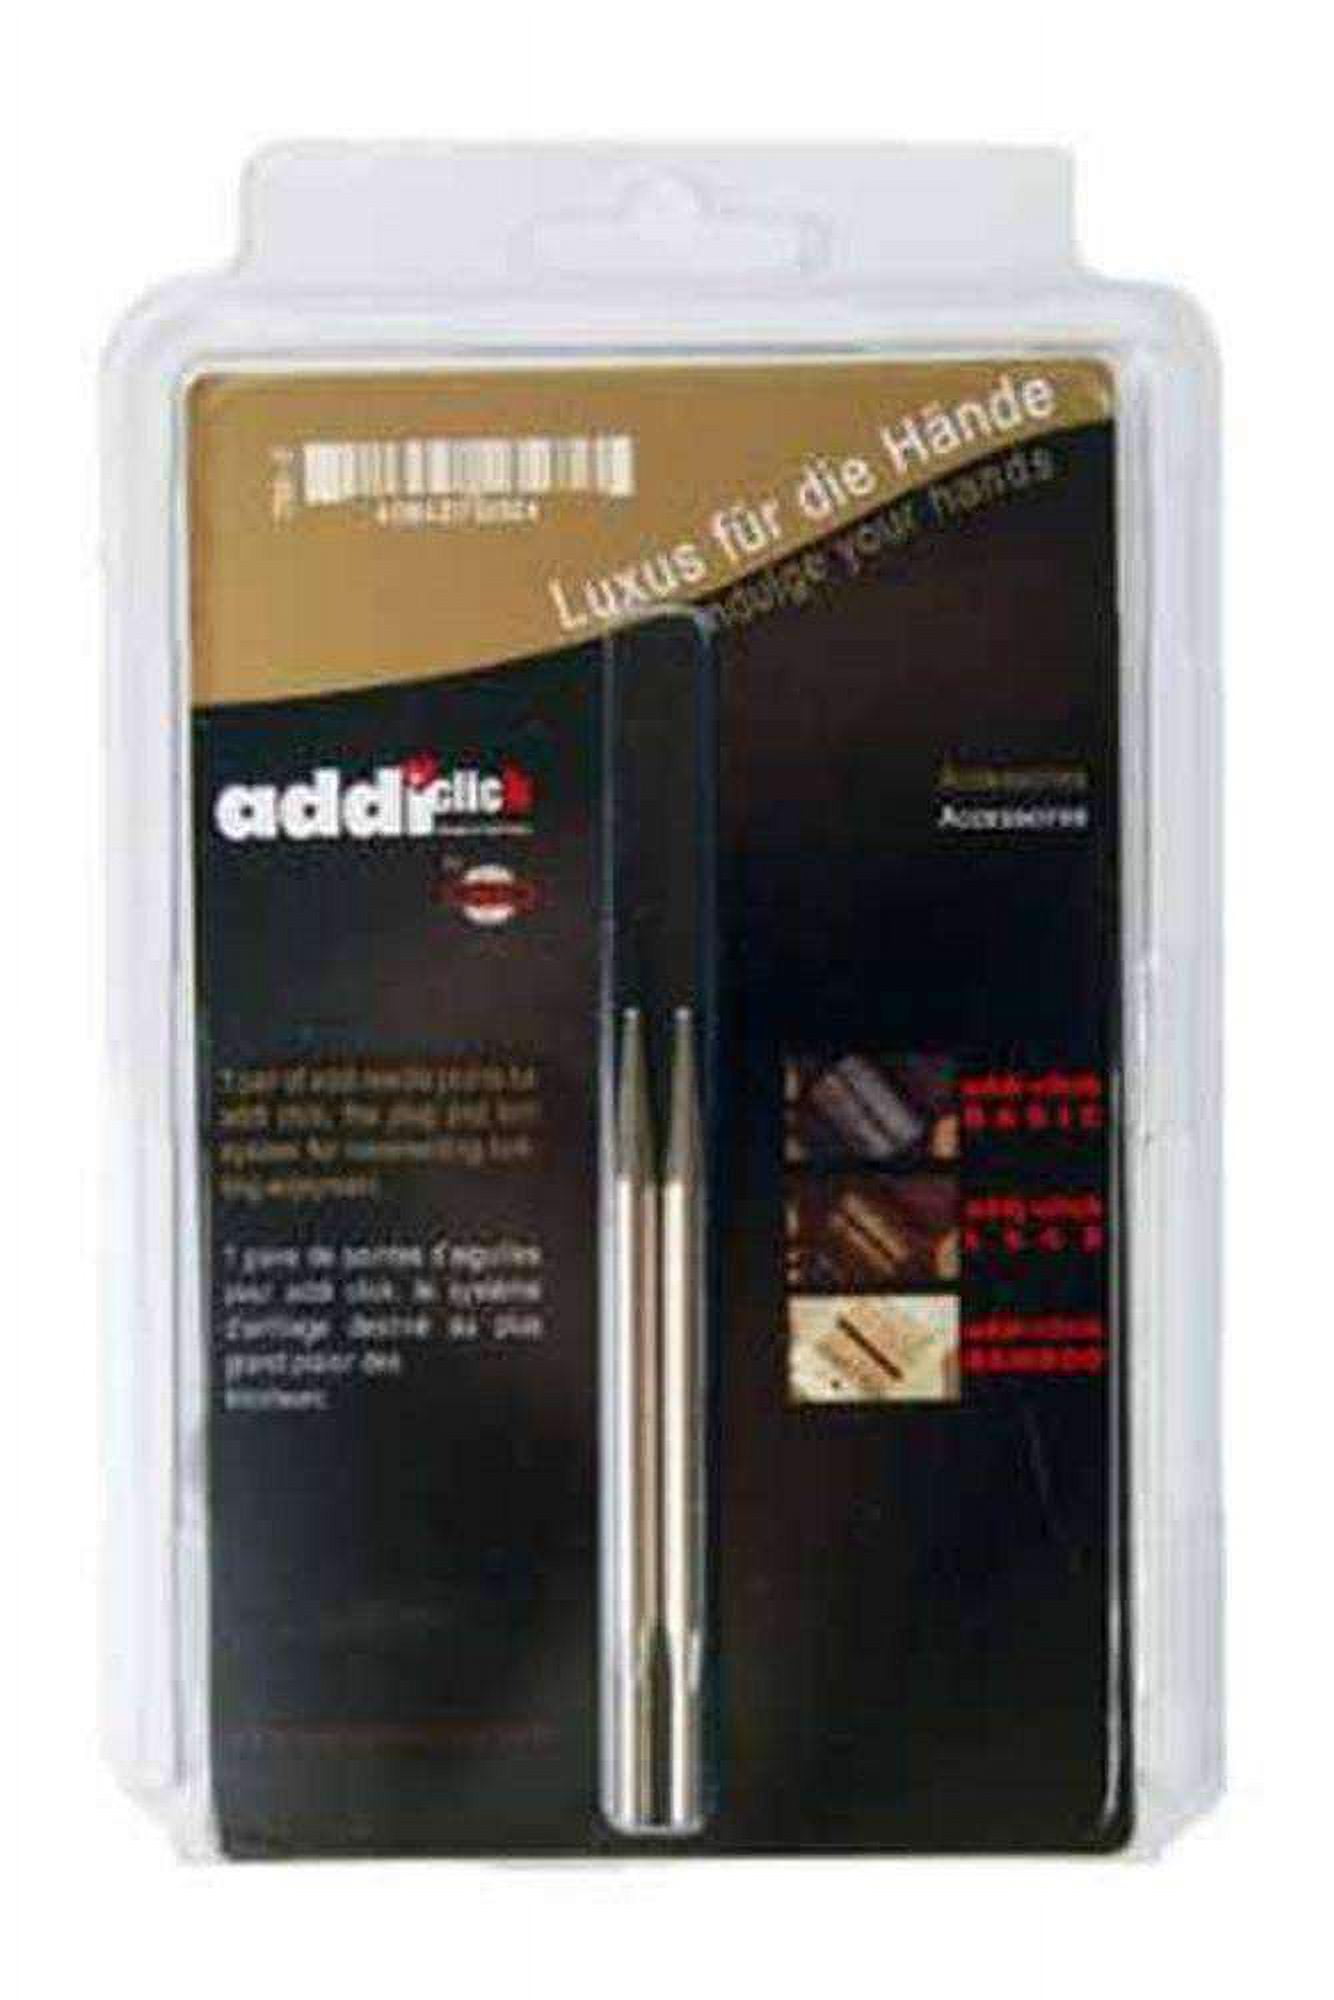 Addi Rocket Circular Needles 24 inch 6 (4mm)